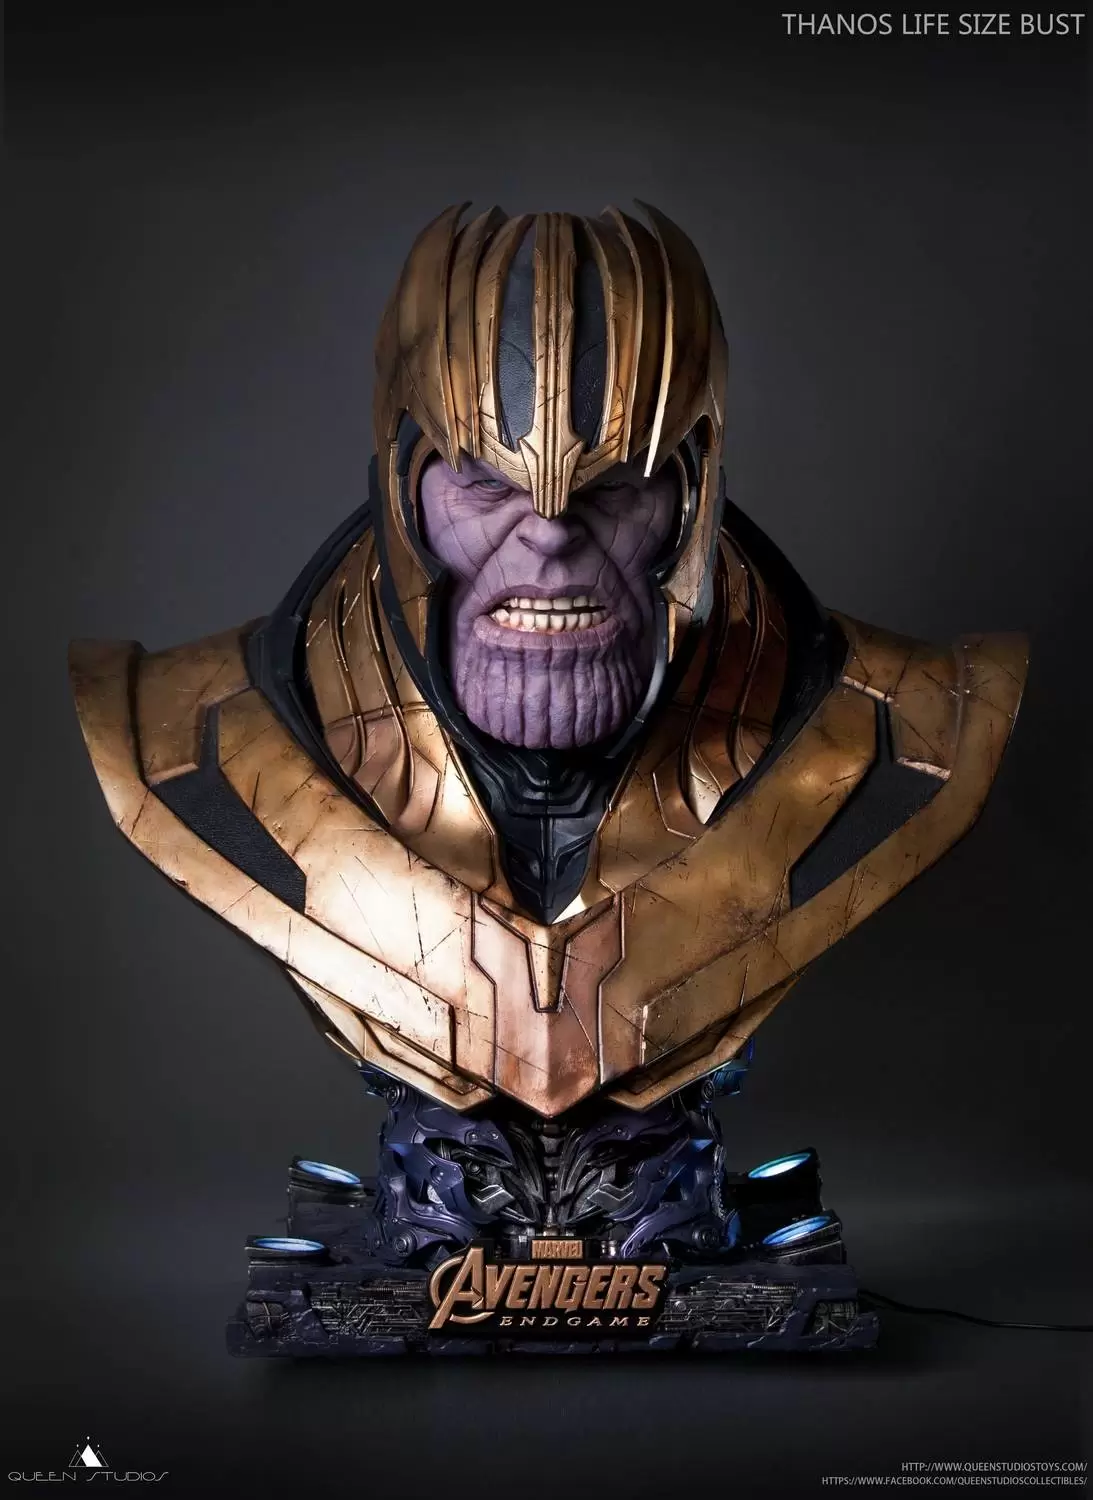 Queen Studios - Thanos - Life Size Bust